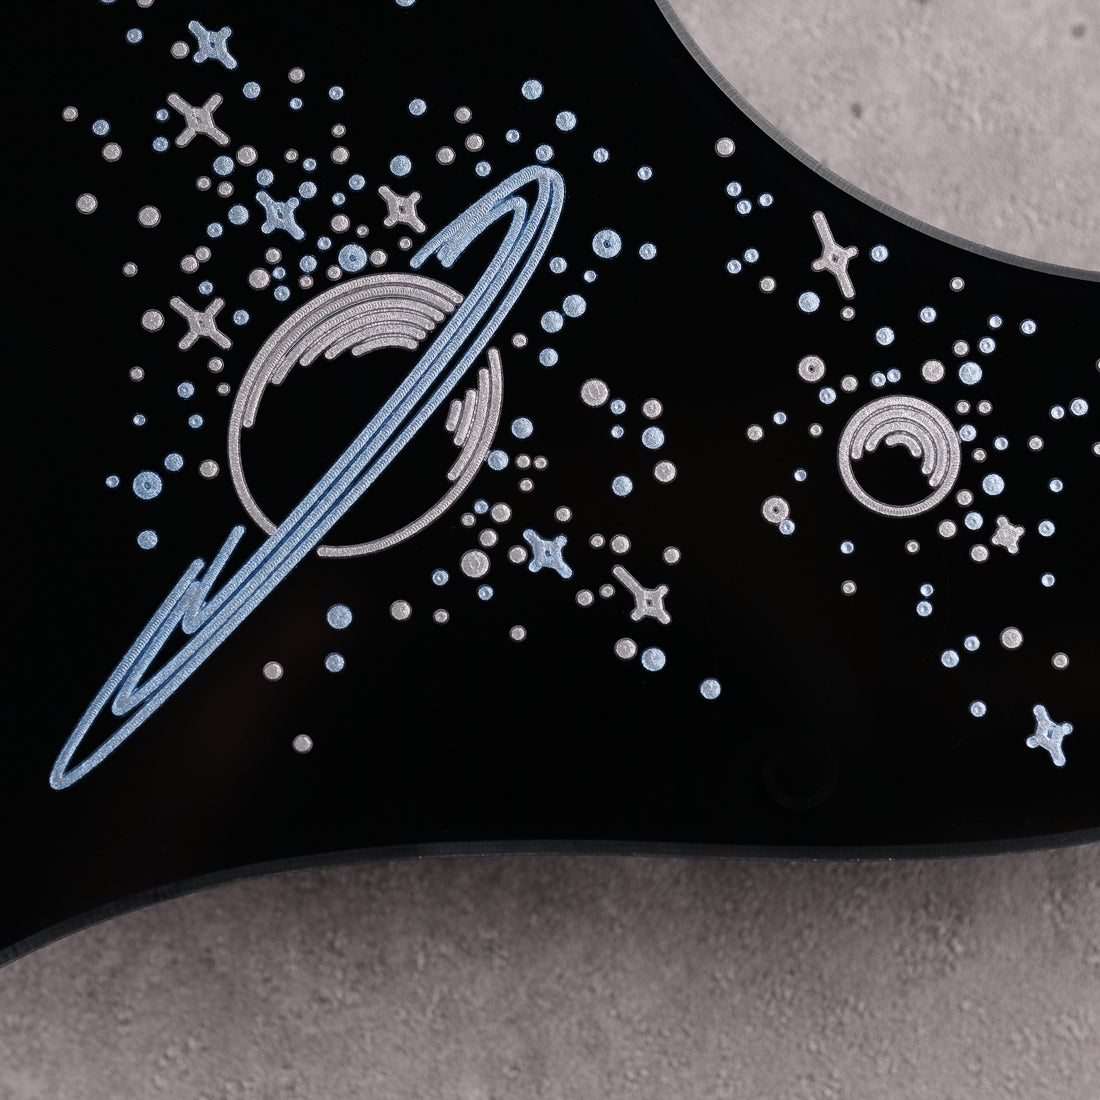 Space Oddity - Mustang Bass PJ Pickguard - on Black Acrylic